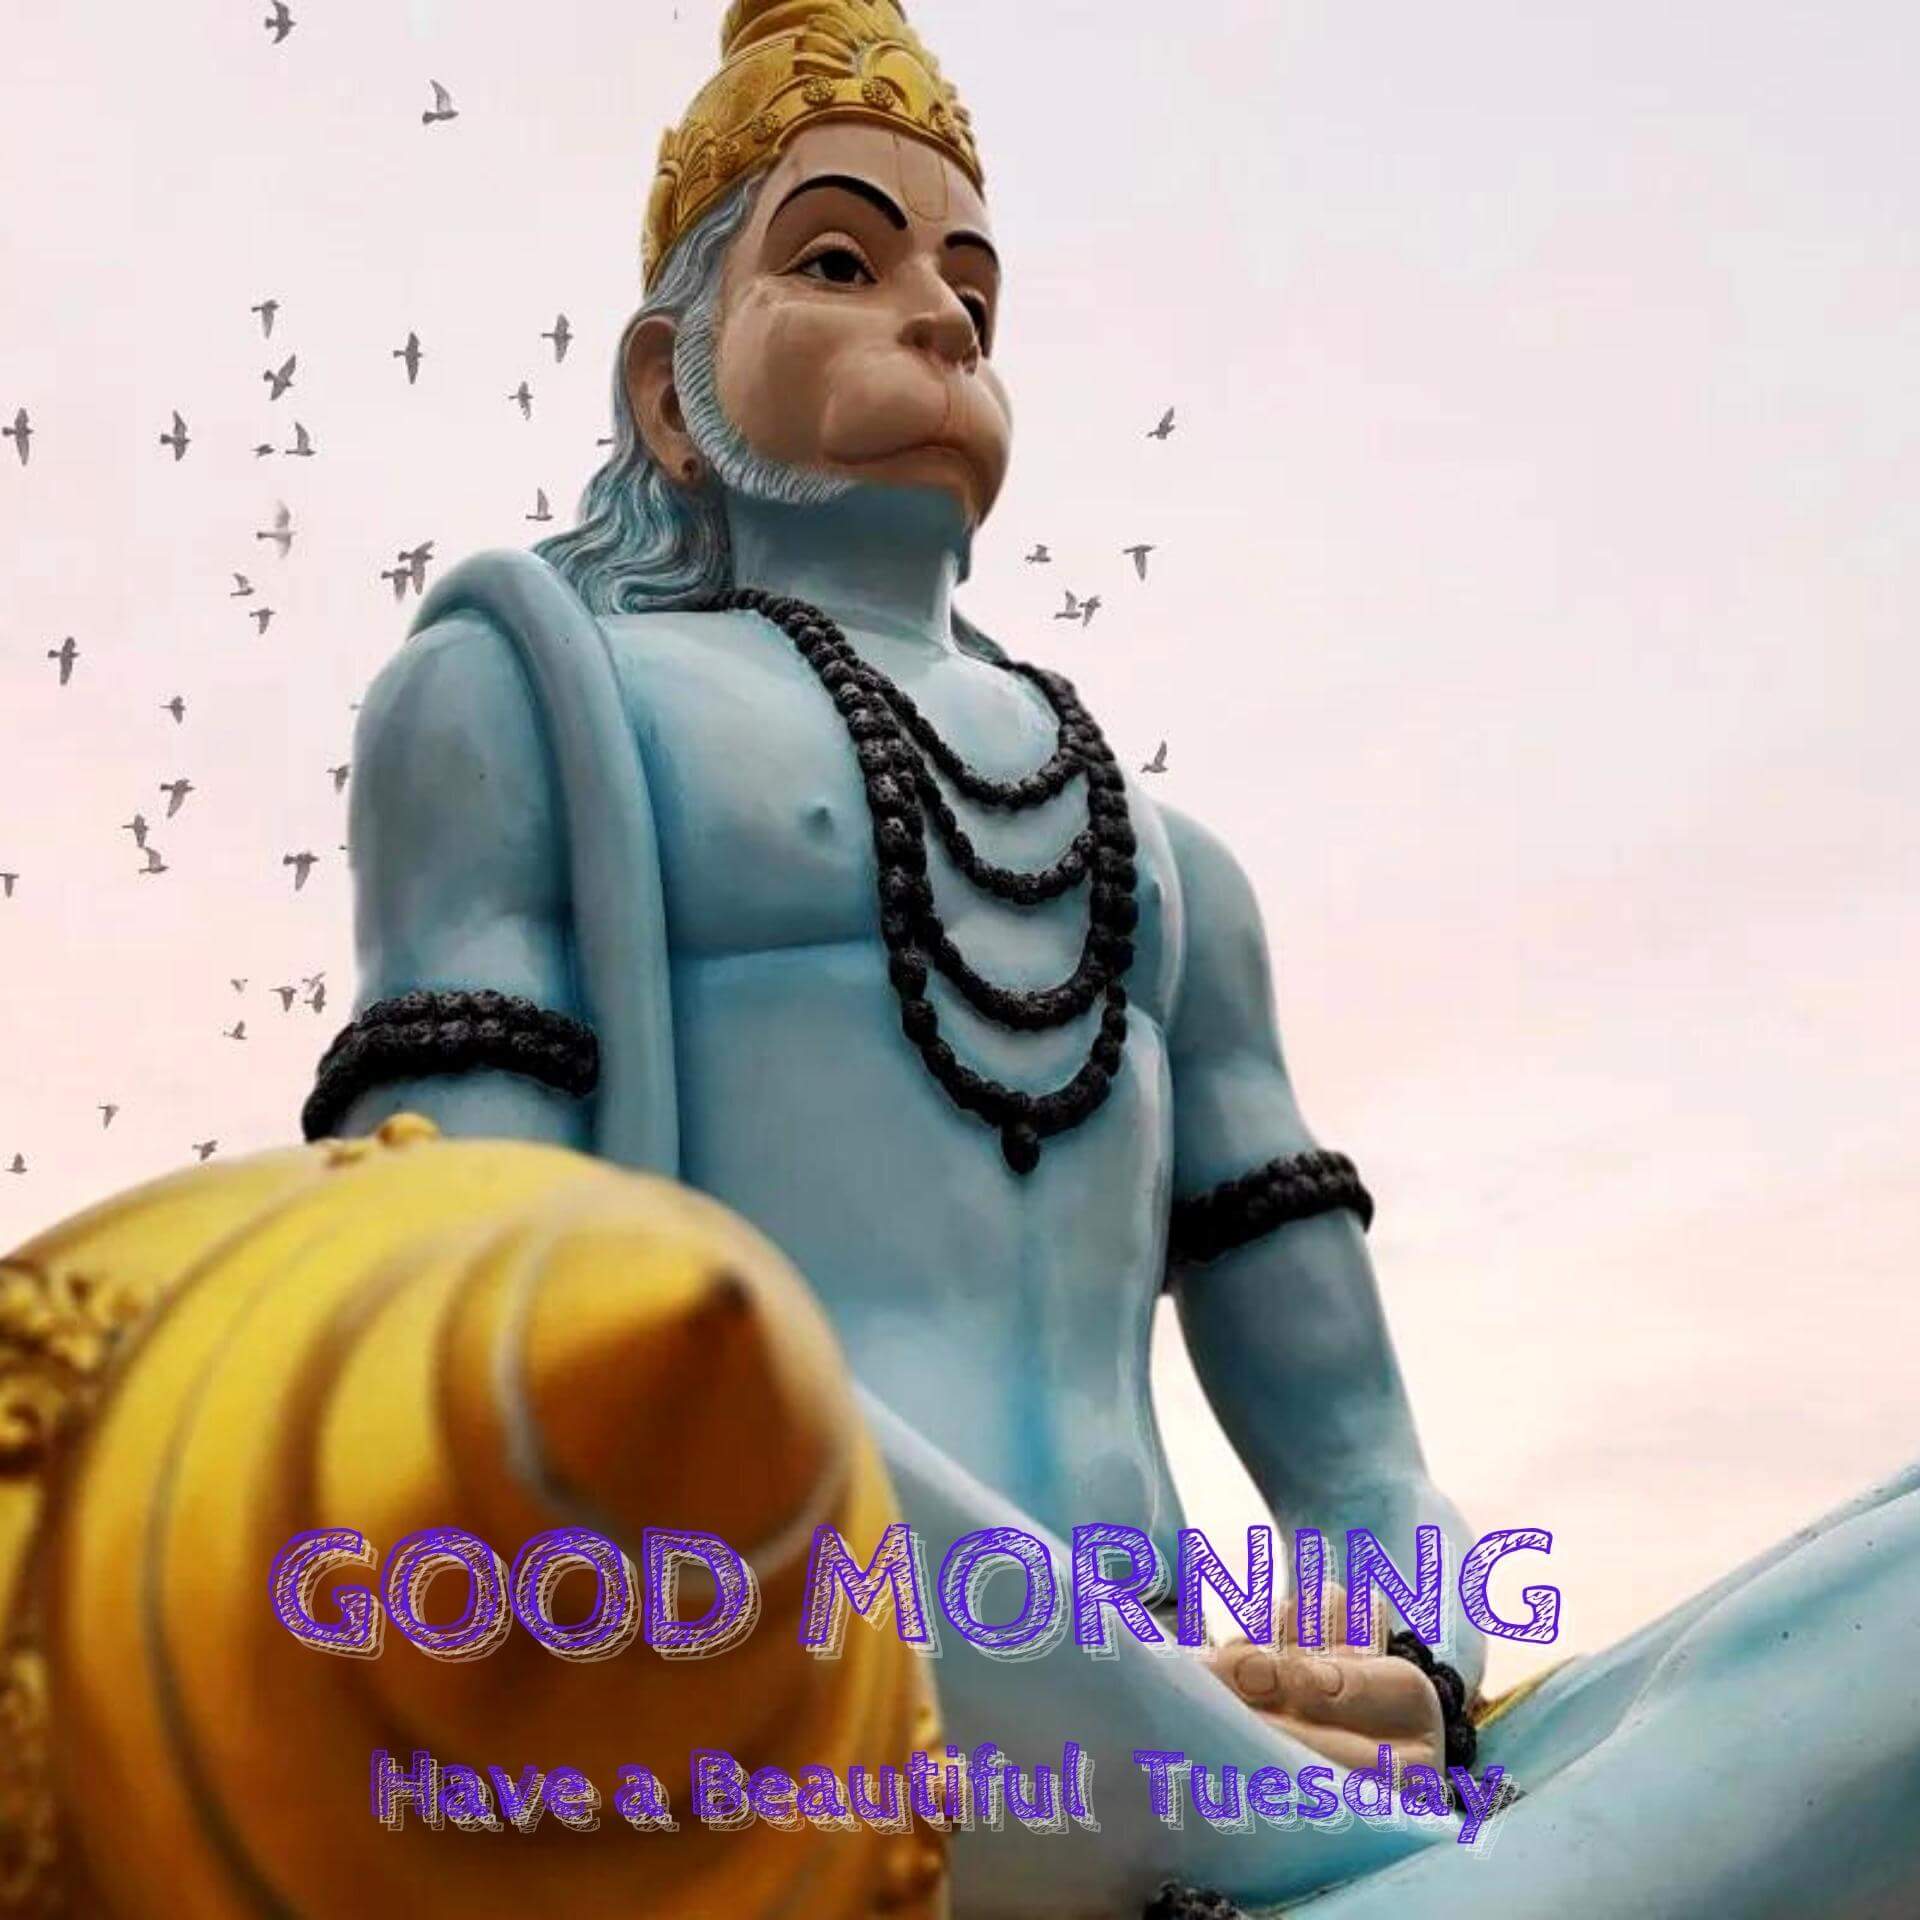 Hanuman JI Tuesday good morning Images Wallpaper Downlaod